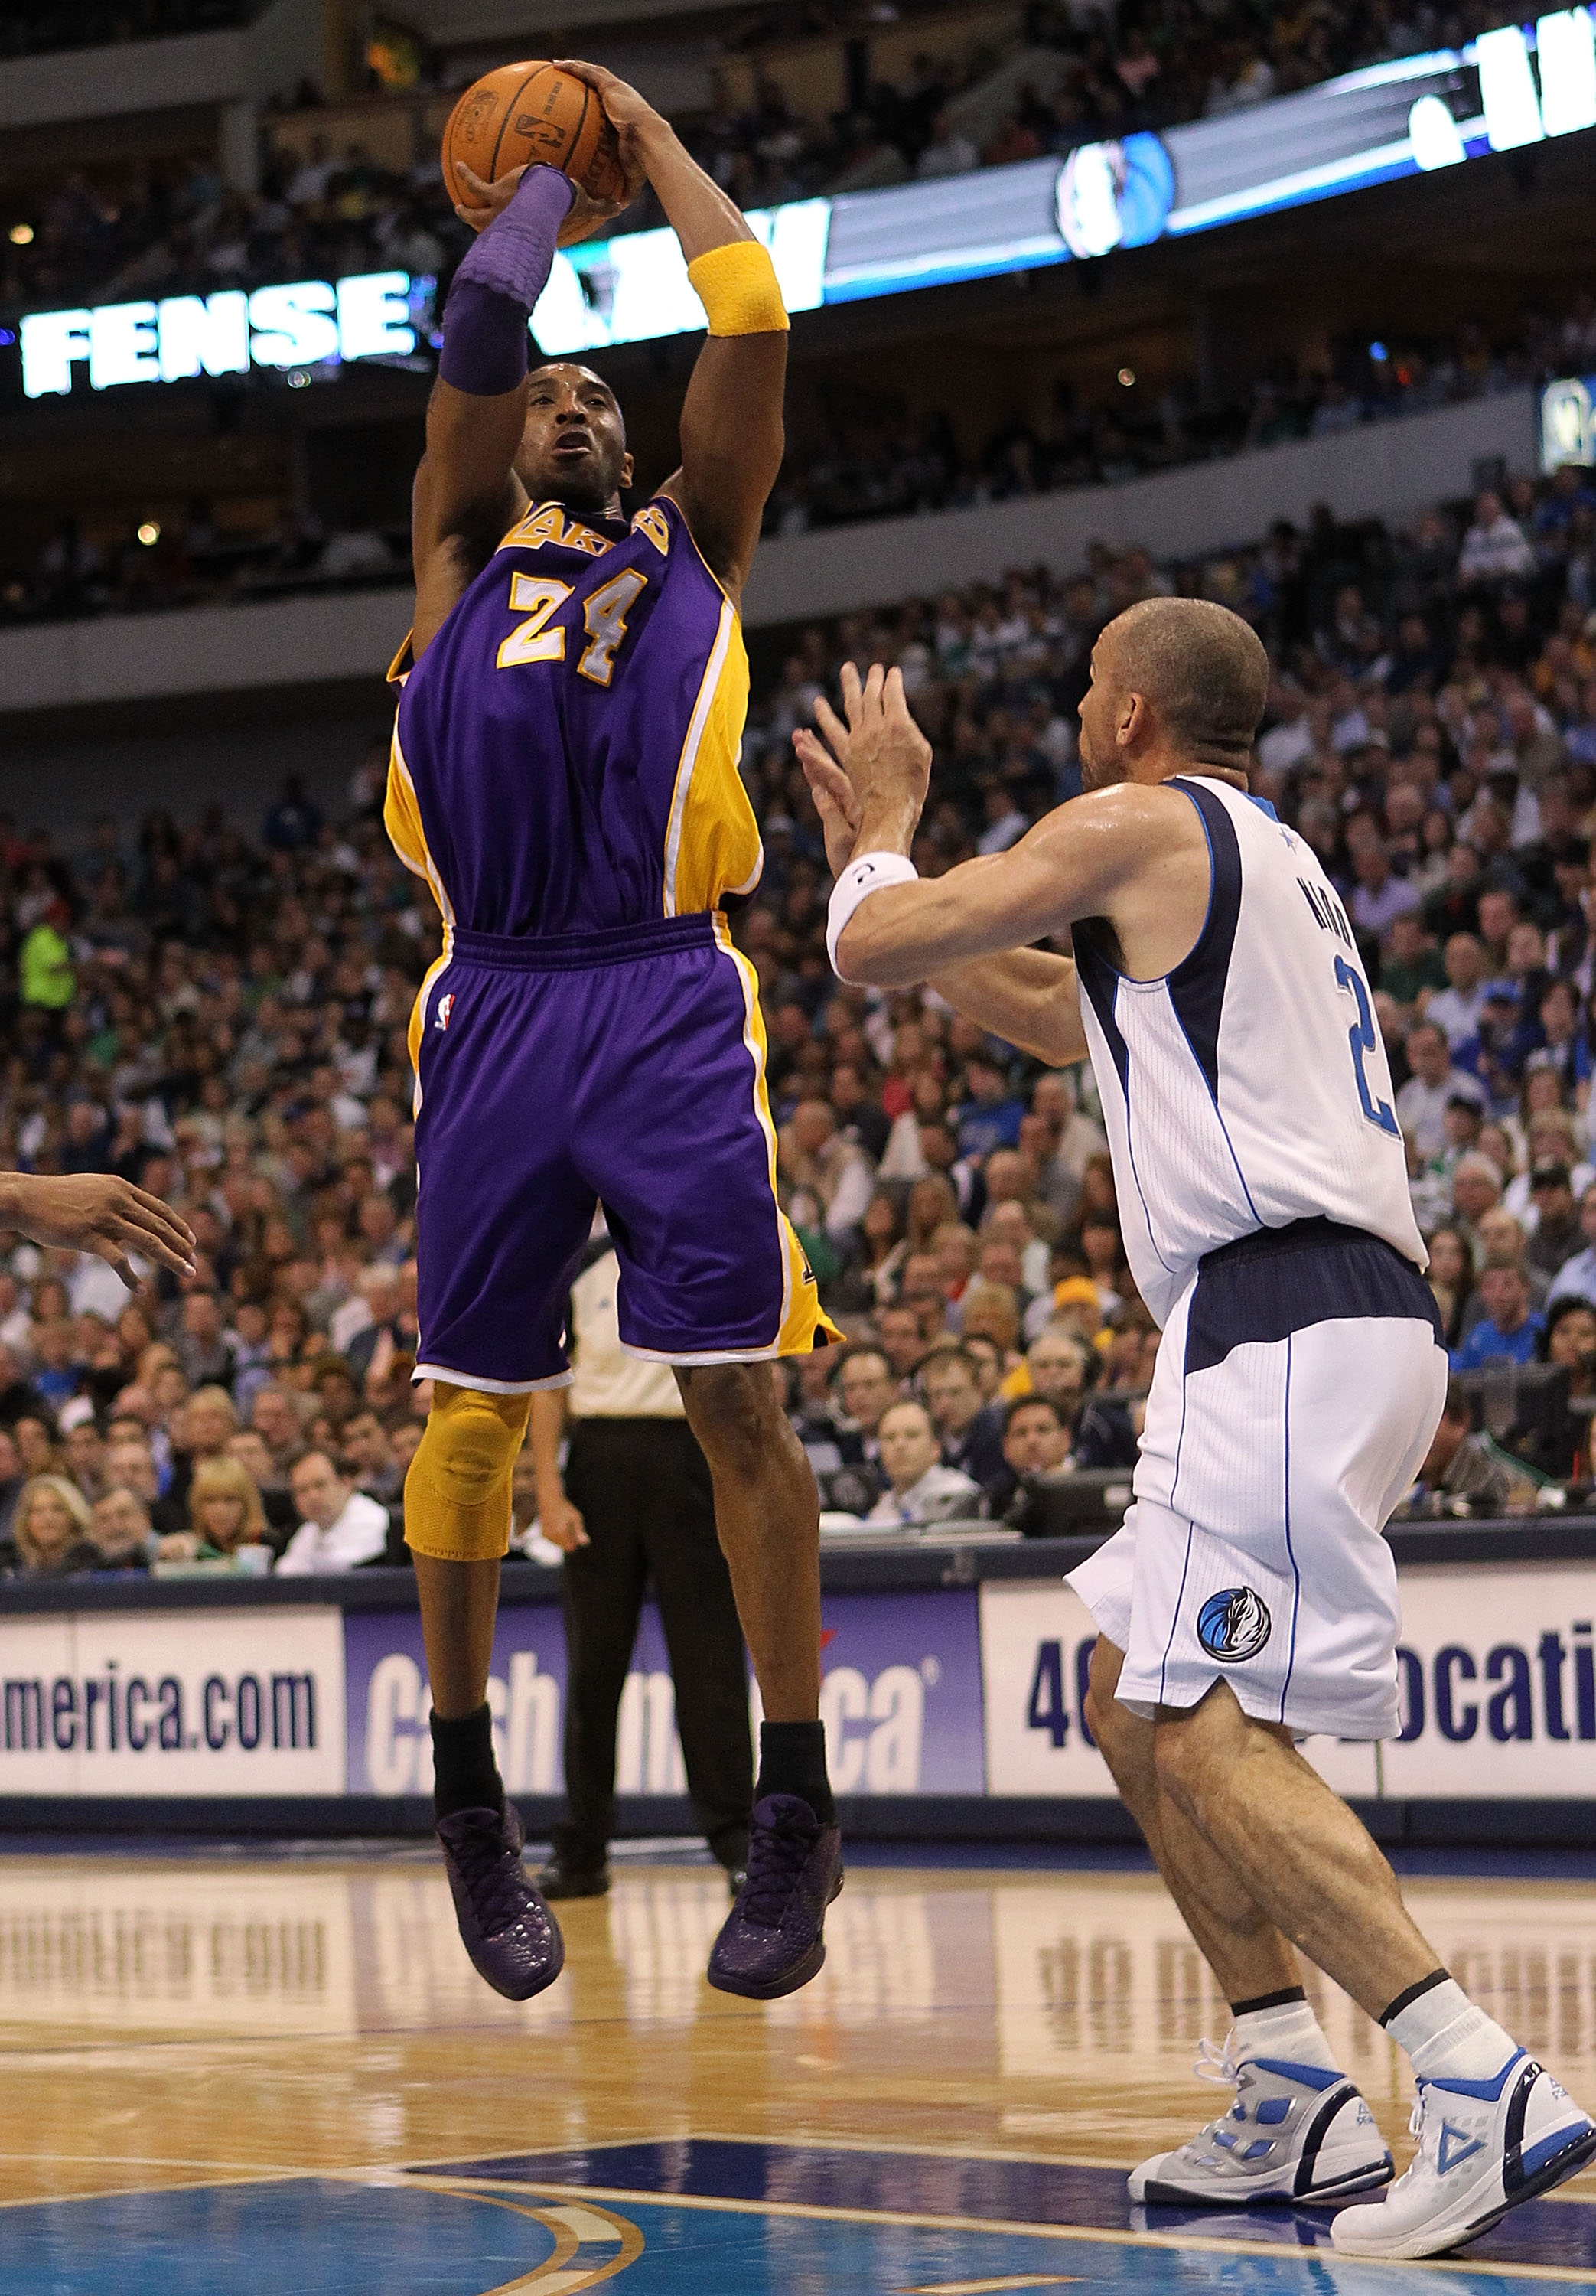 Kobe taking shots on, off court